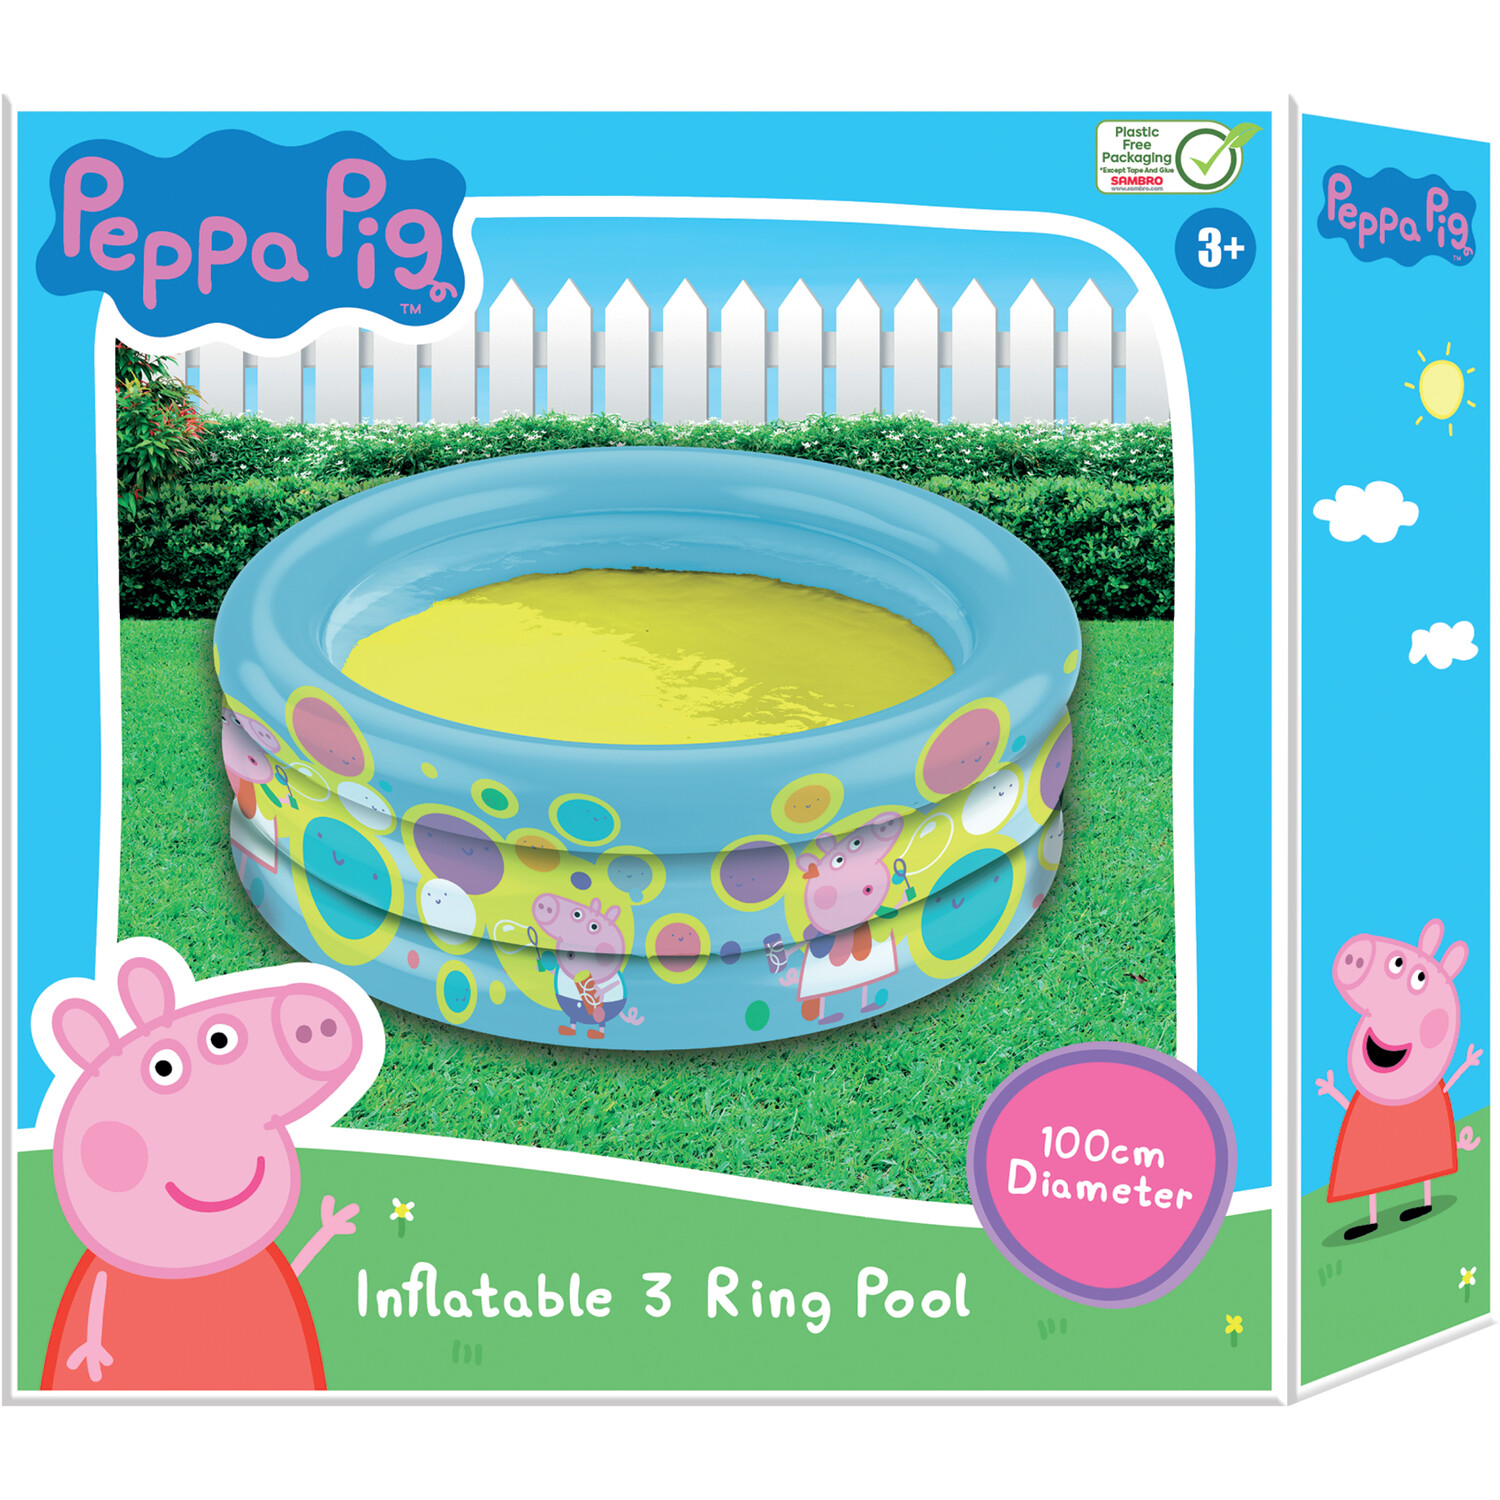 Peppa Pig Inflatable 3 Ring Pool - Blue Image